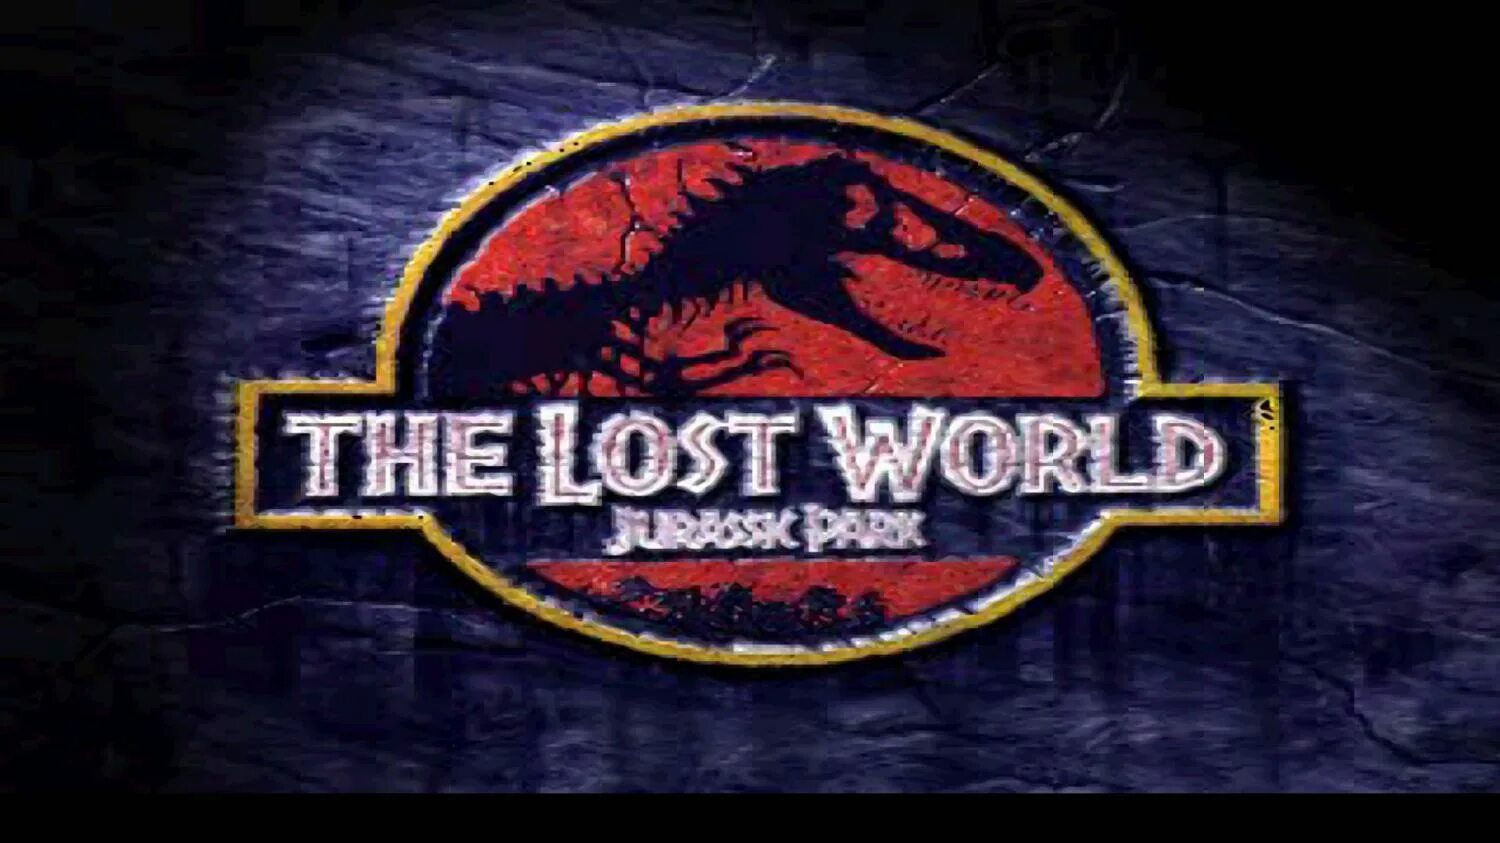 Lost world 1. The Lost World Jurassic Park ps1. Jurassic Park Lost World(Pal) ps1. The Lost World Jurassic Park ps1 обложка. The Lost World: Jurassic Park игра.